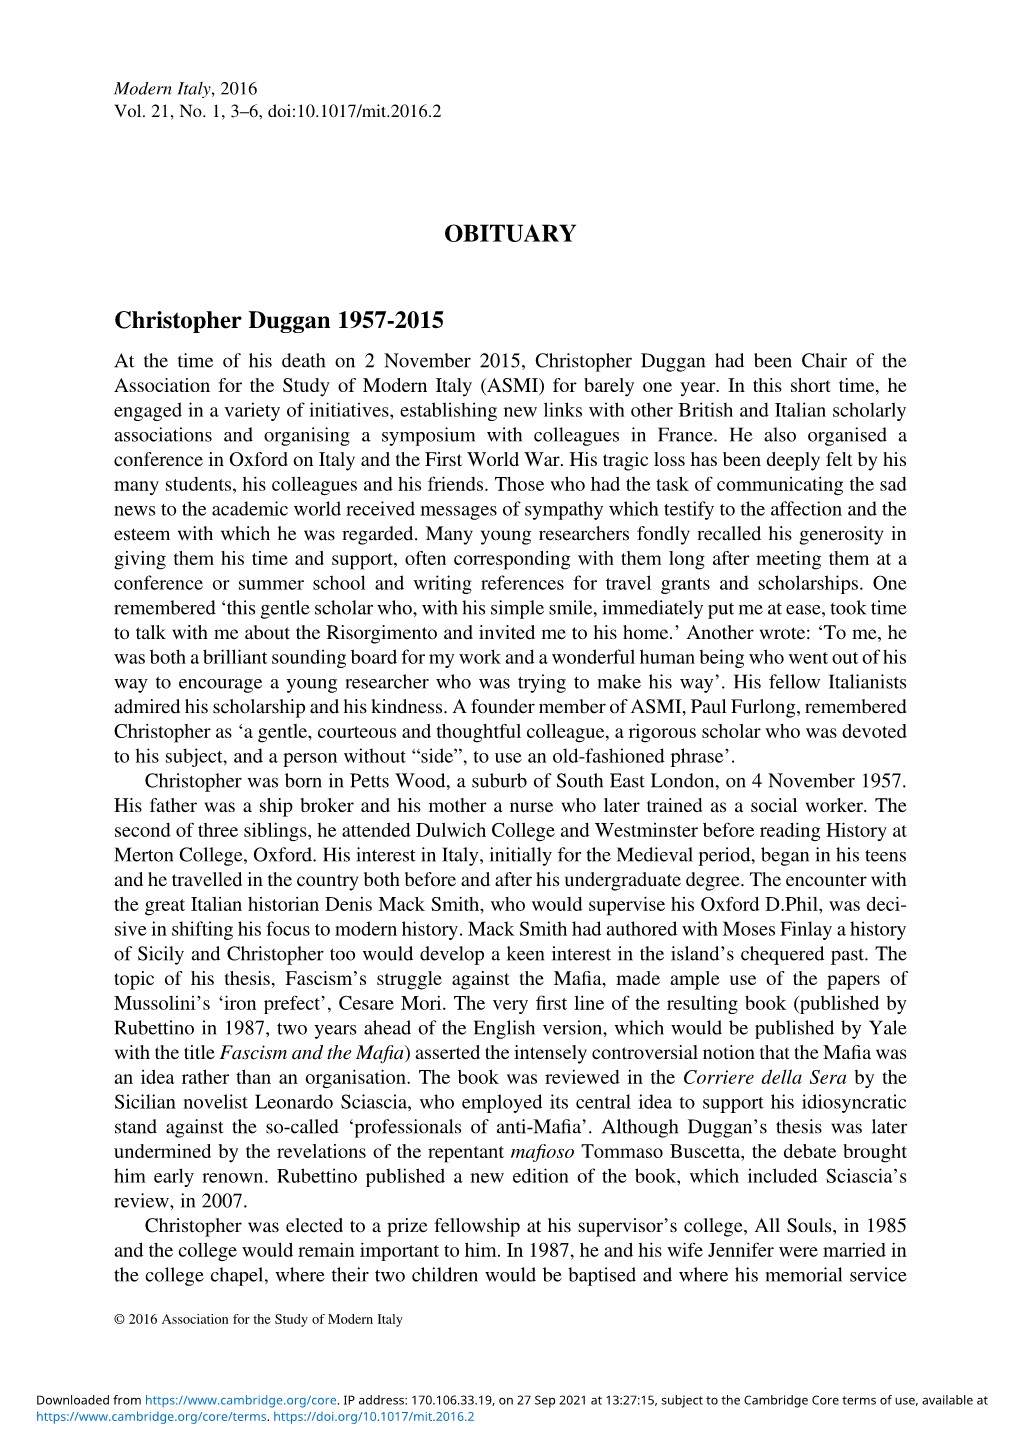 OBITUARY Christopher Duggan 1957-2015